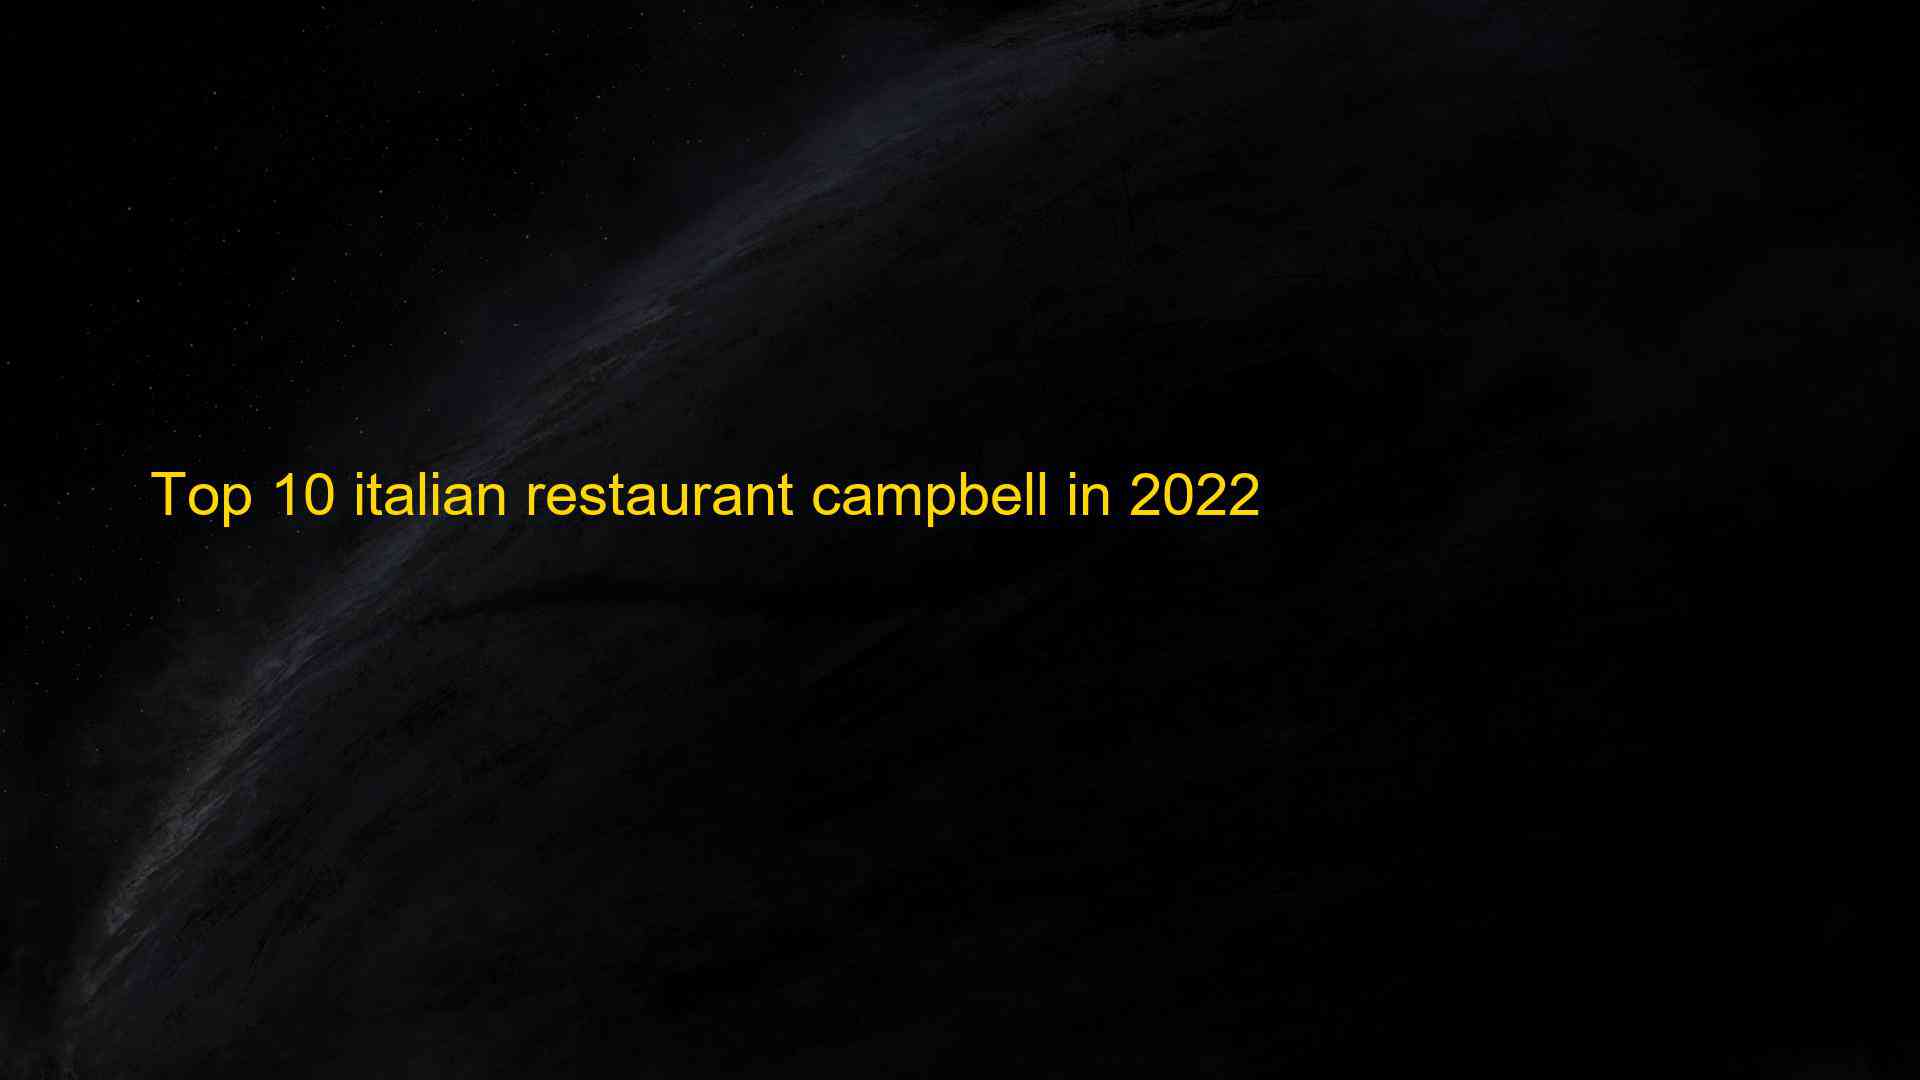 Top 10 italian restaurant campbell in 2022 1663333932